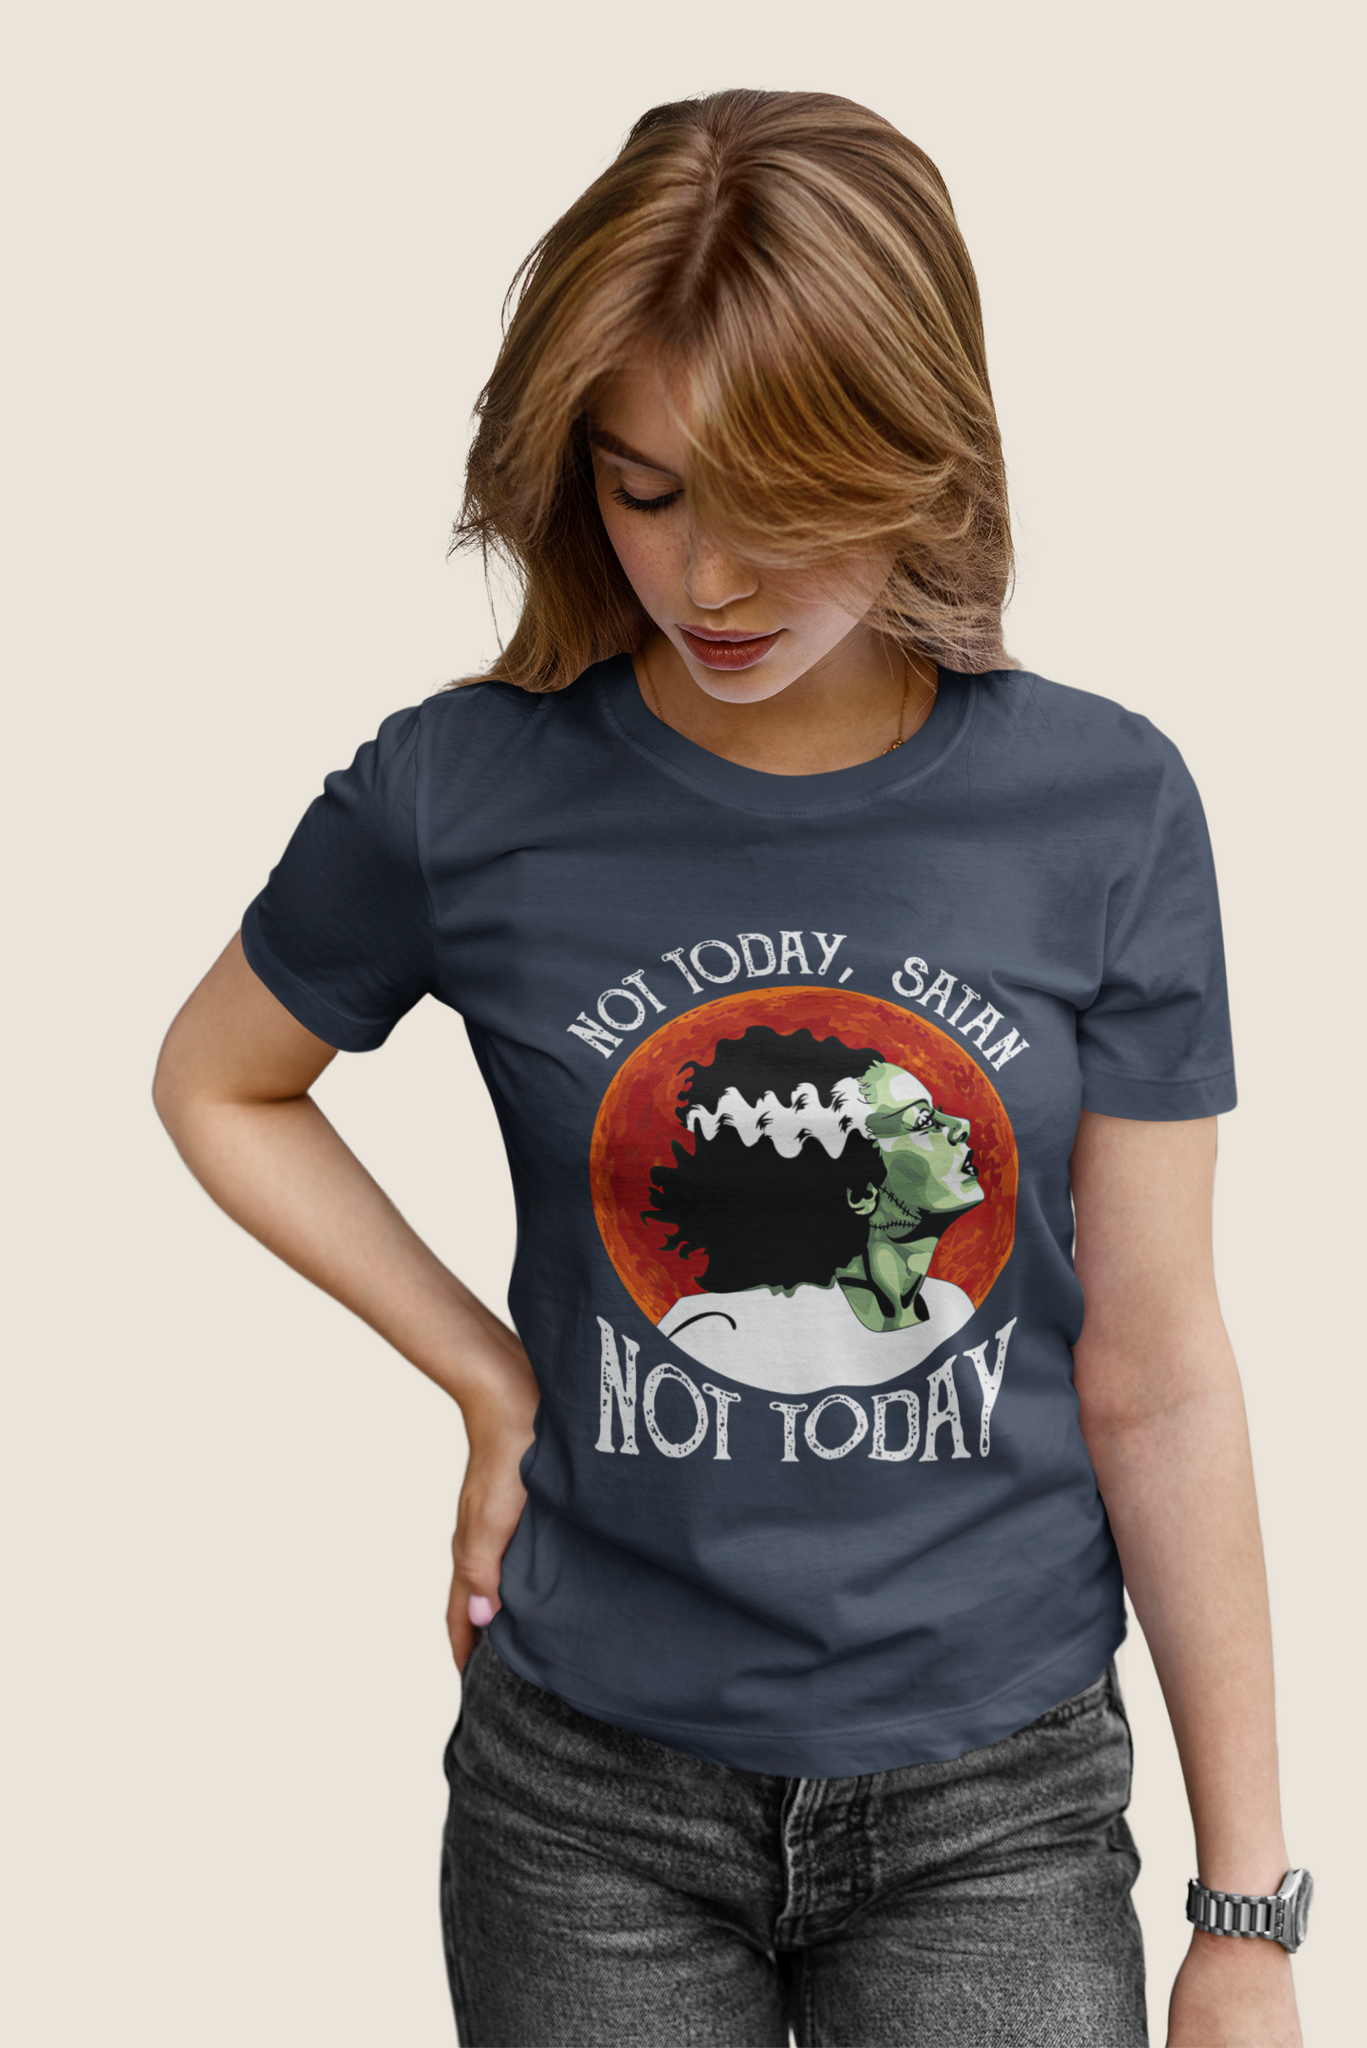 Frankenstein T Shirt, Not Today Satan Not Today Tshirt, Monsters Bride T Shirt, Halloween Gifts